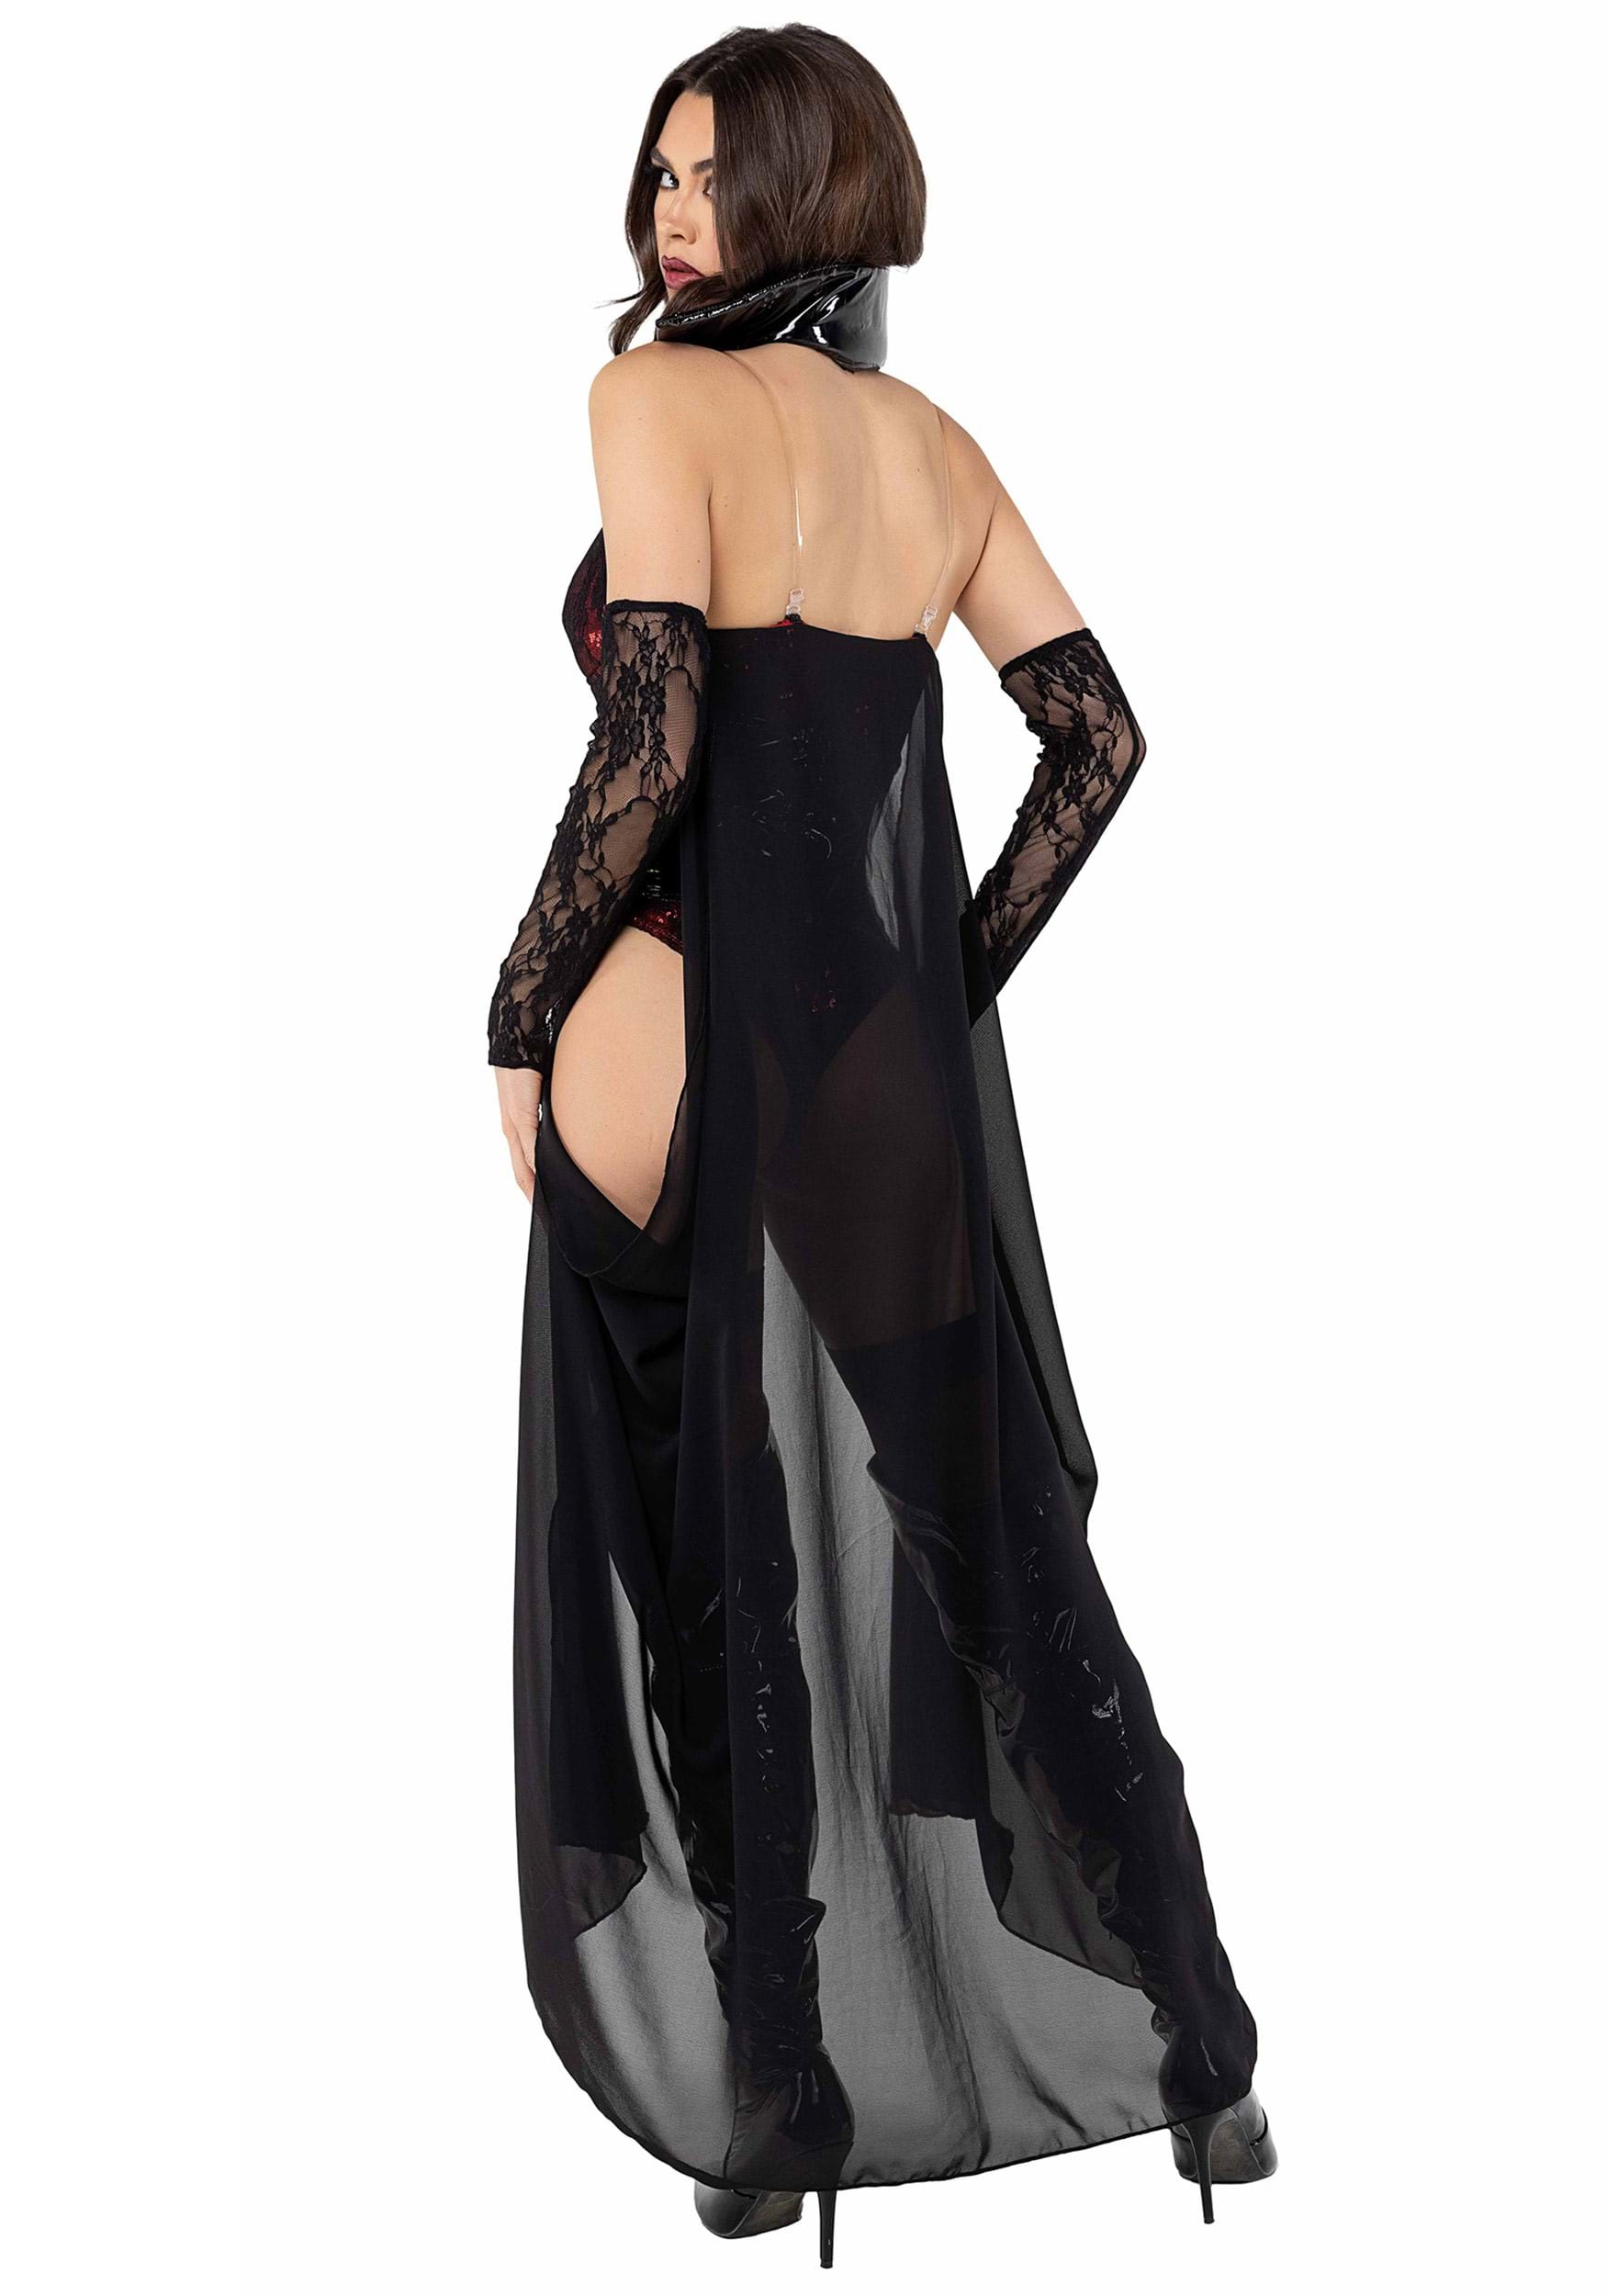 Women's Vampire Fancy Dress Costume Playboy